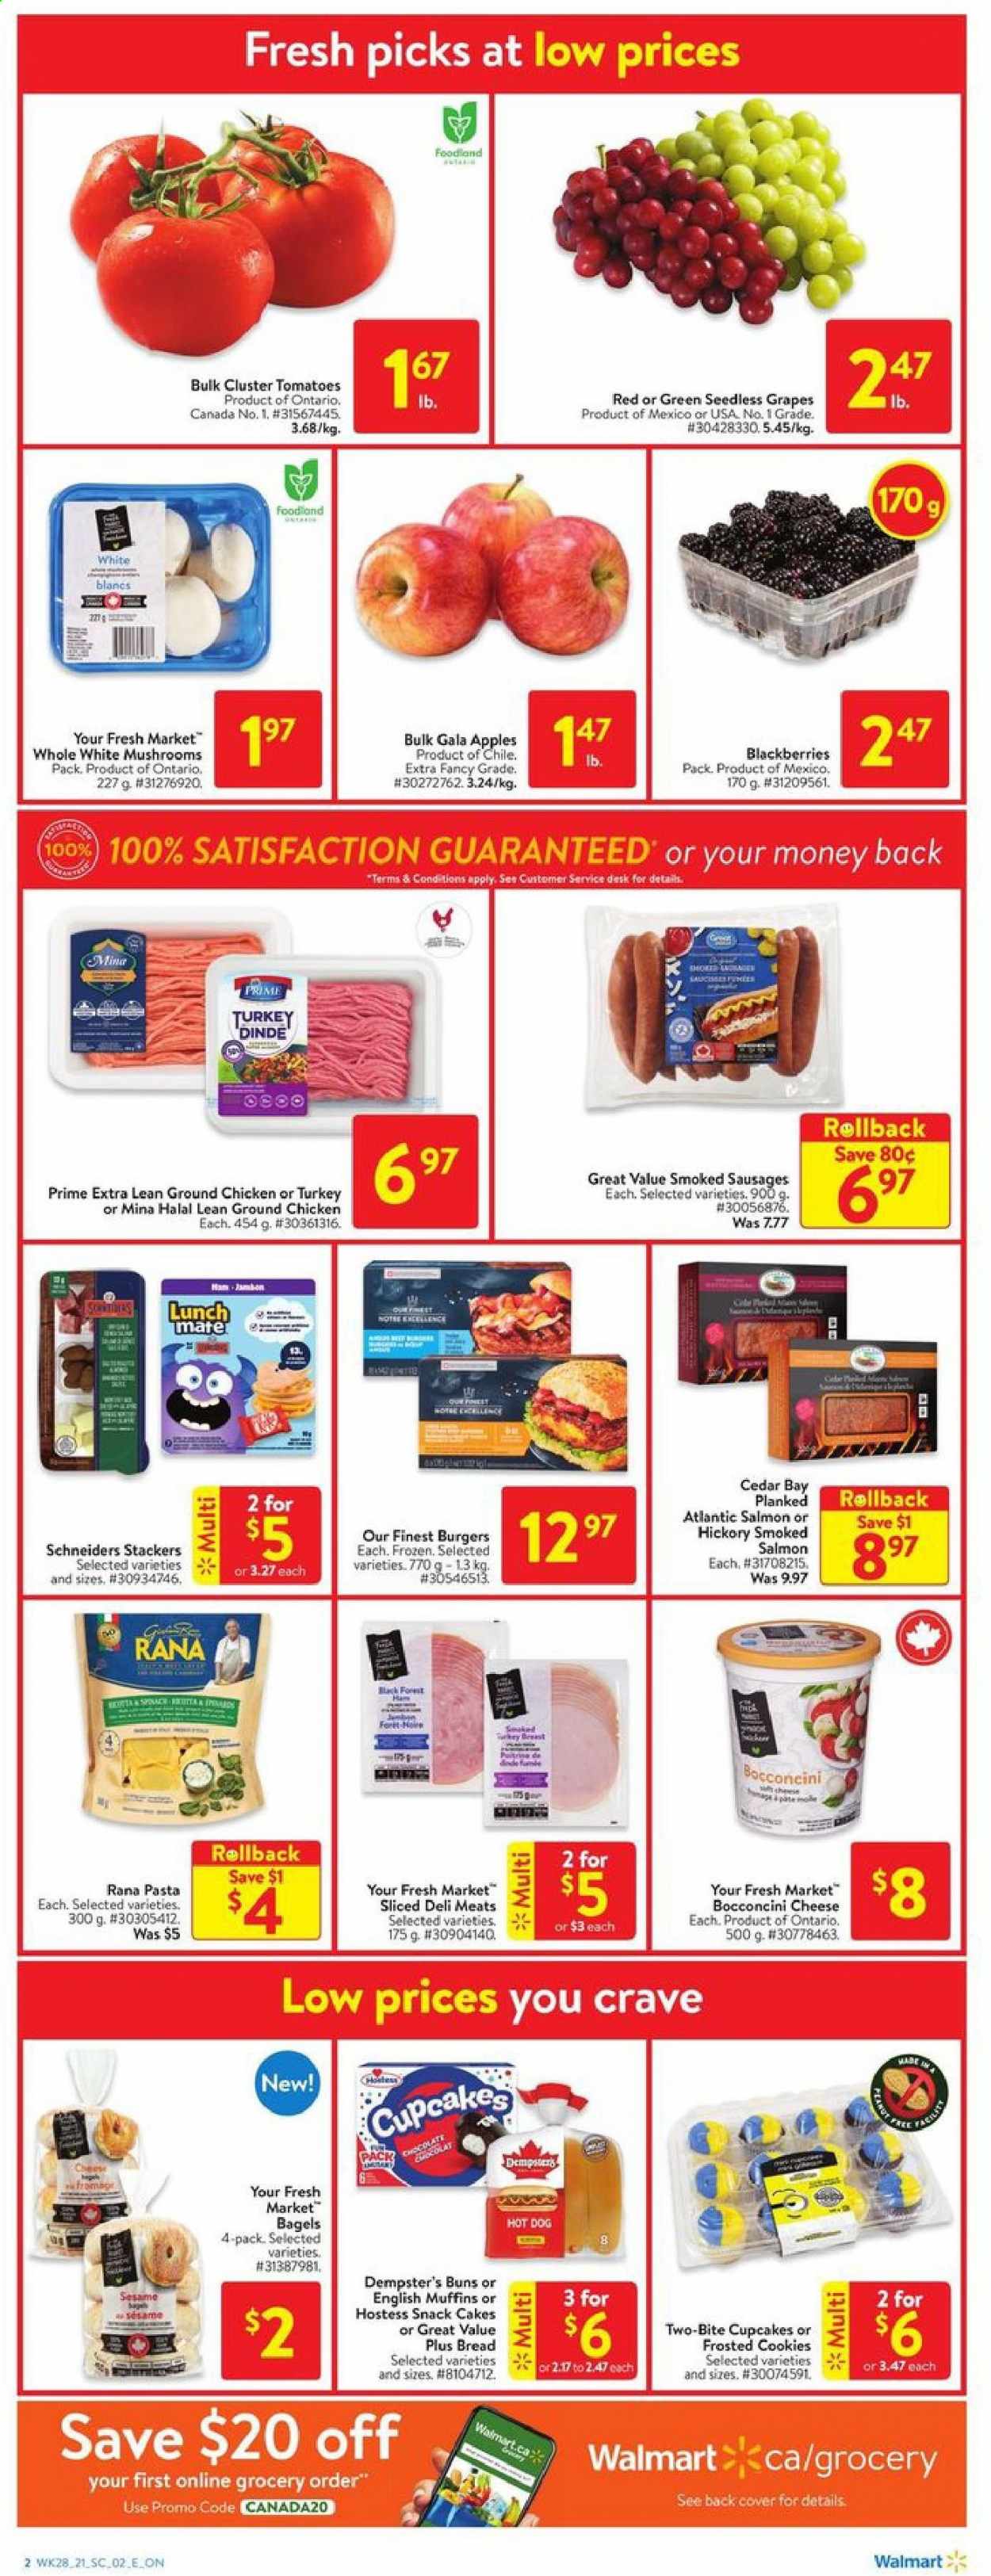 thumbnail - Circulaire Walmart - 05 Août 2021 - 11 Août 2021 - Produits soldés - fromage, cookies, sésame. Page 2.